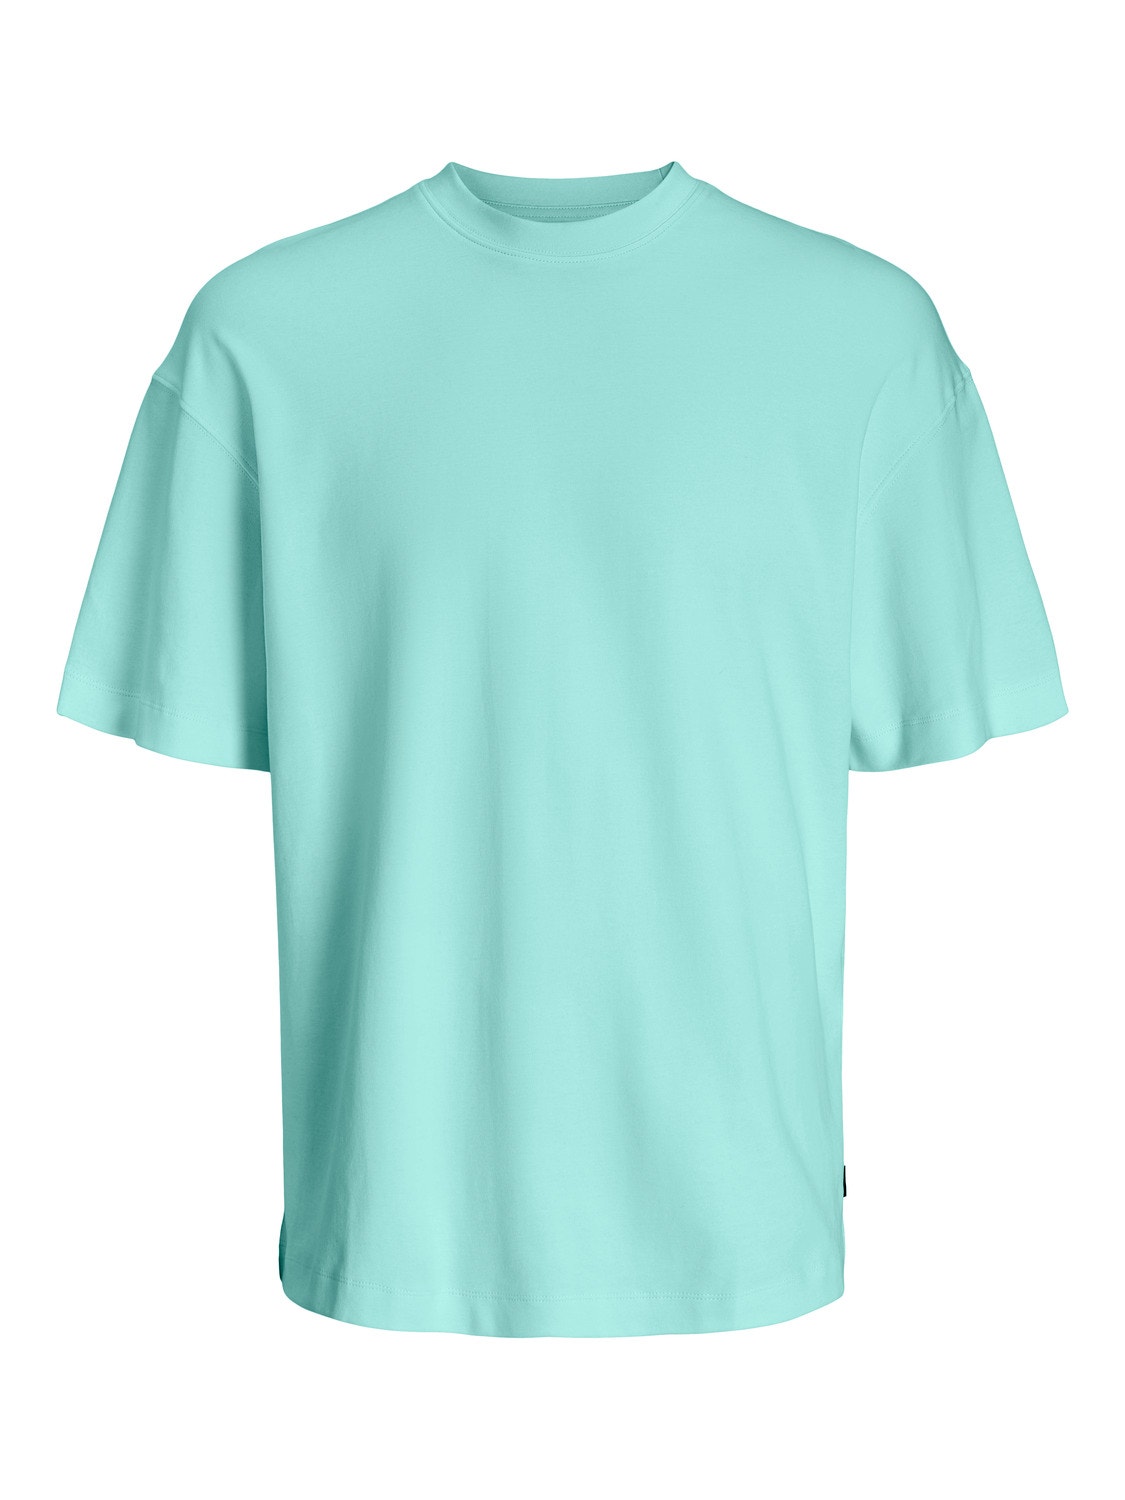 Jack & Jones Plain Crew neck T-shirt -Soothing Sea - 12254412